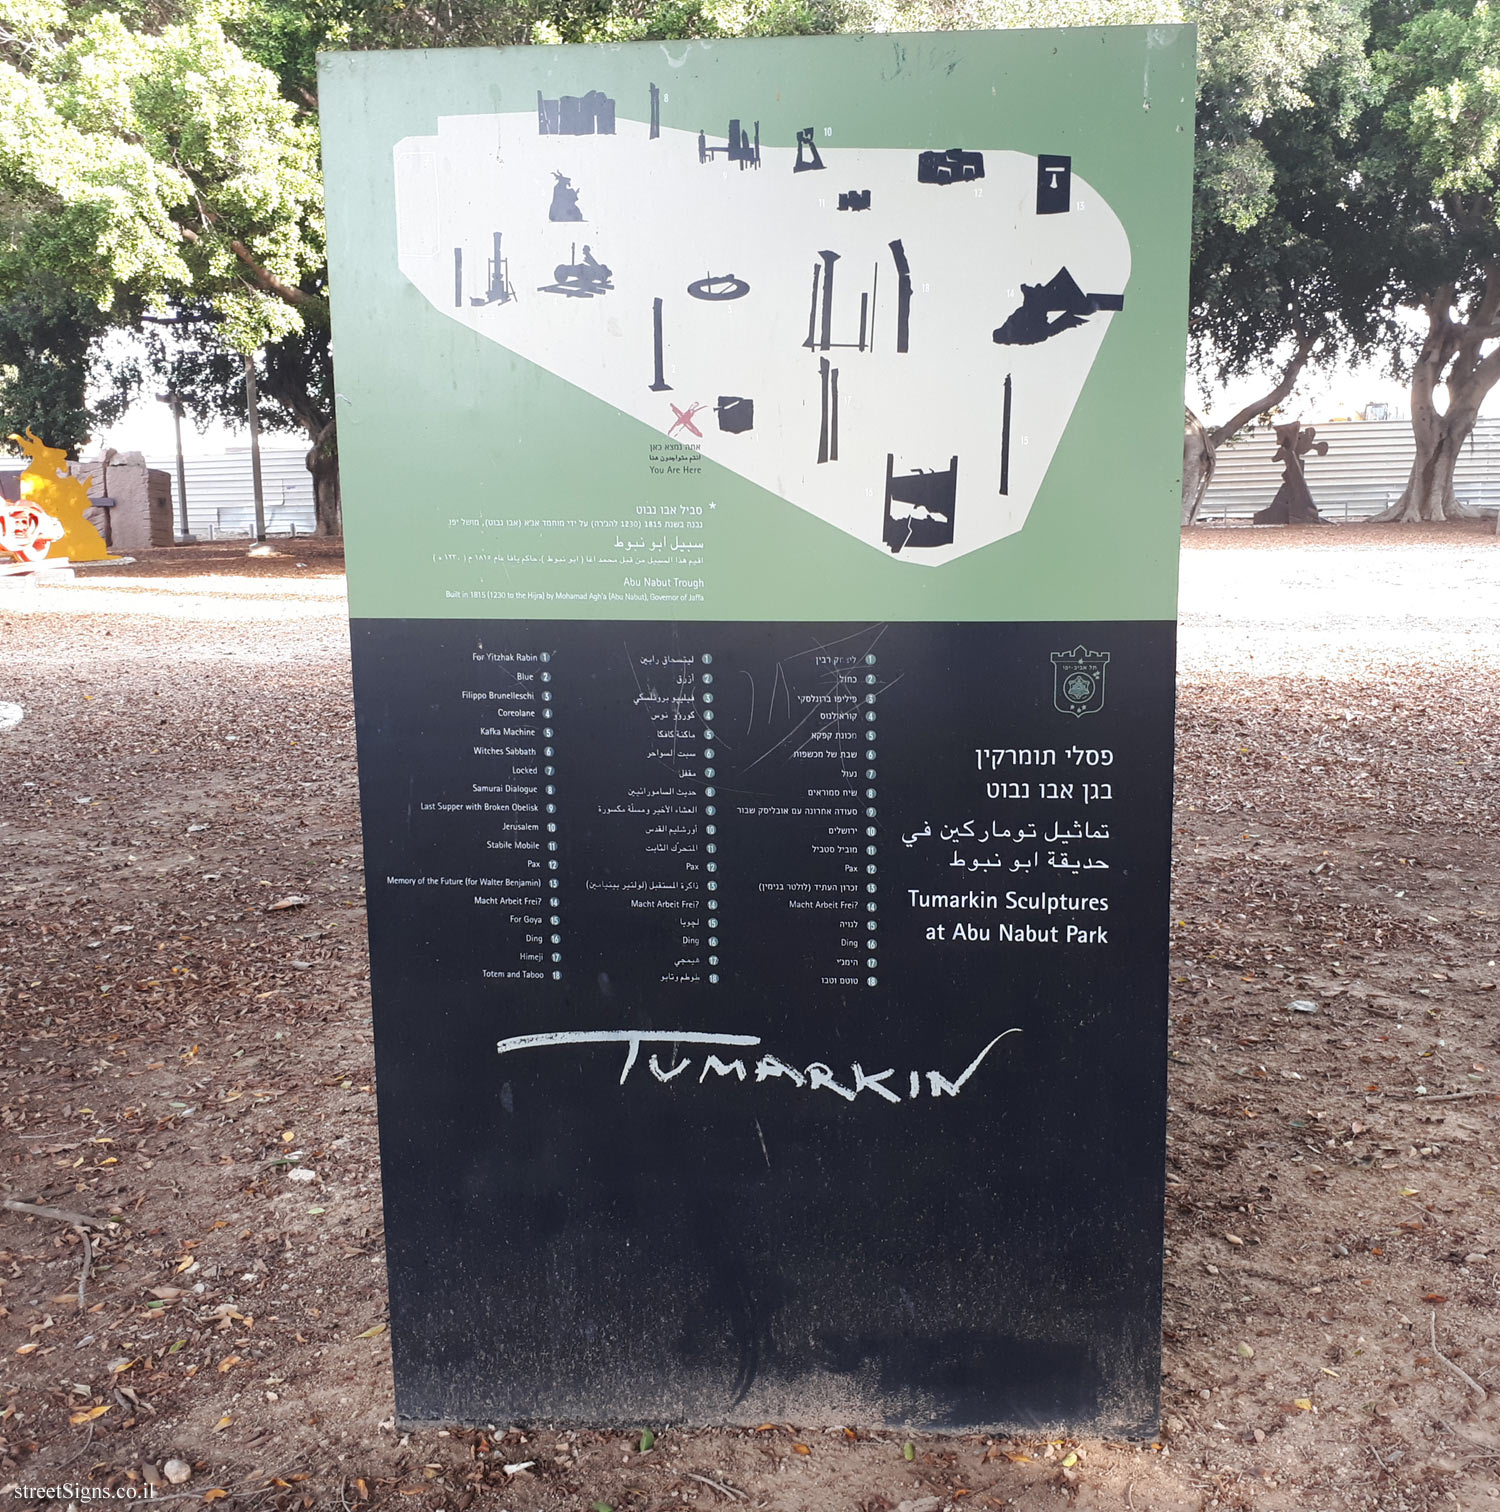 Tel Aviv - Tomarkin sculptures at Abu Nabot Park